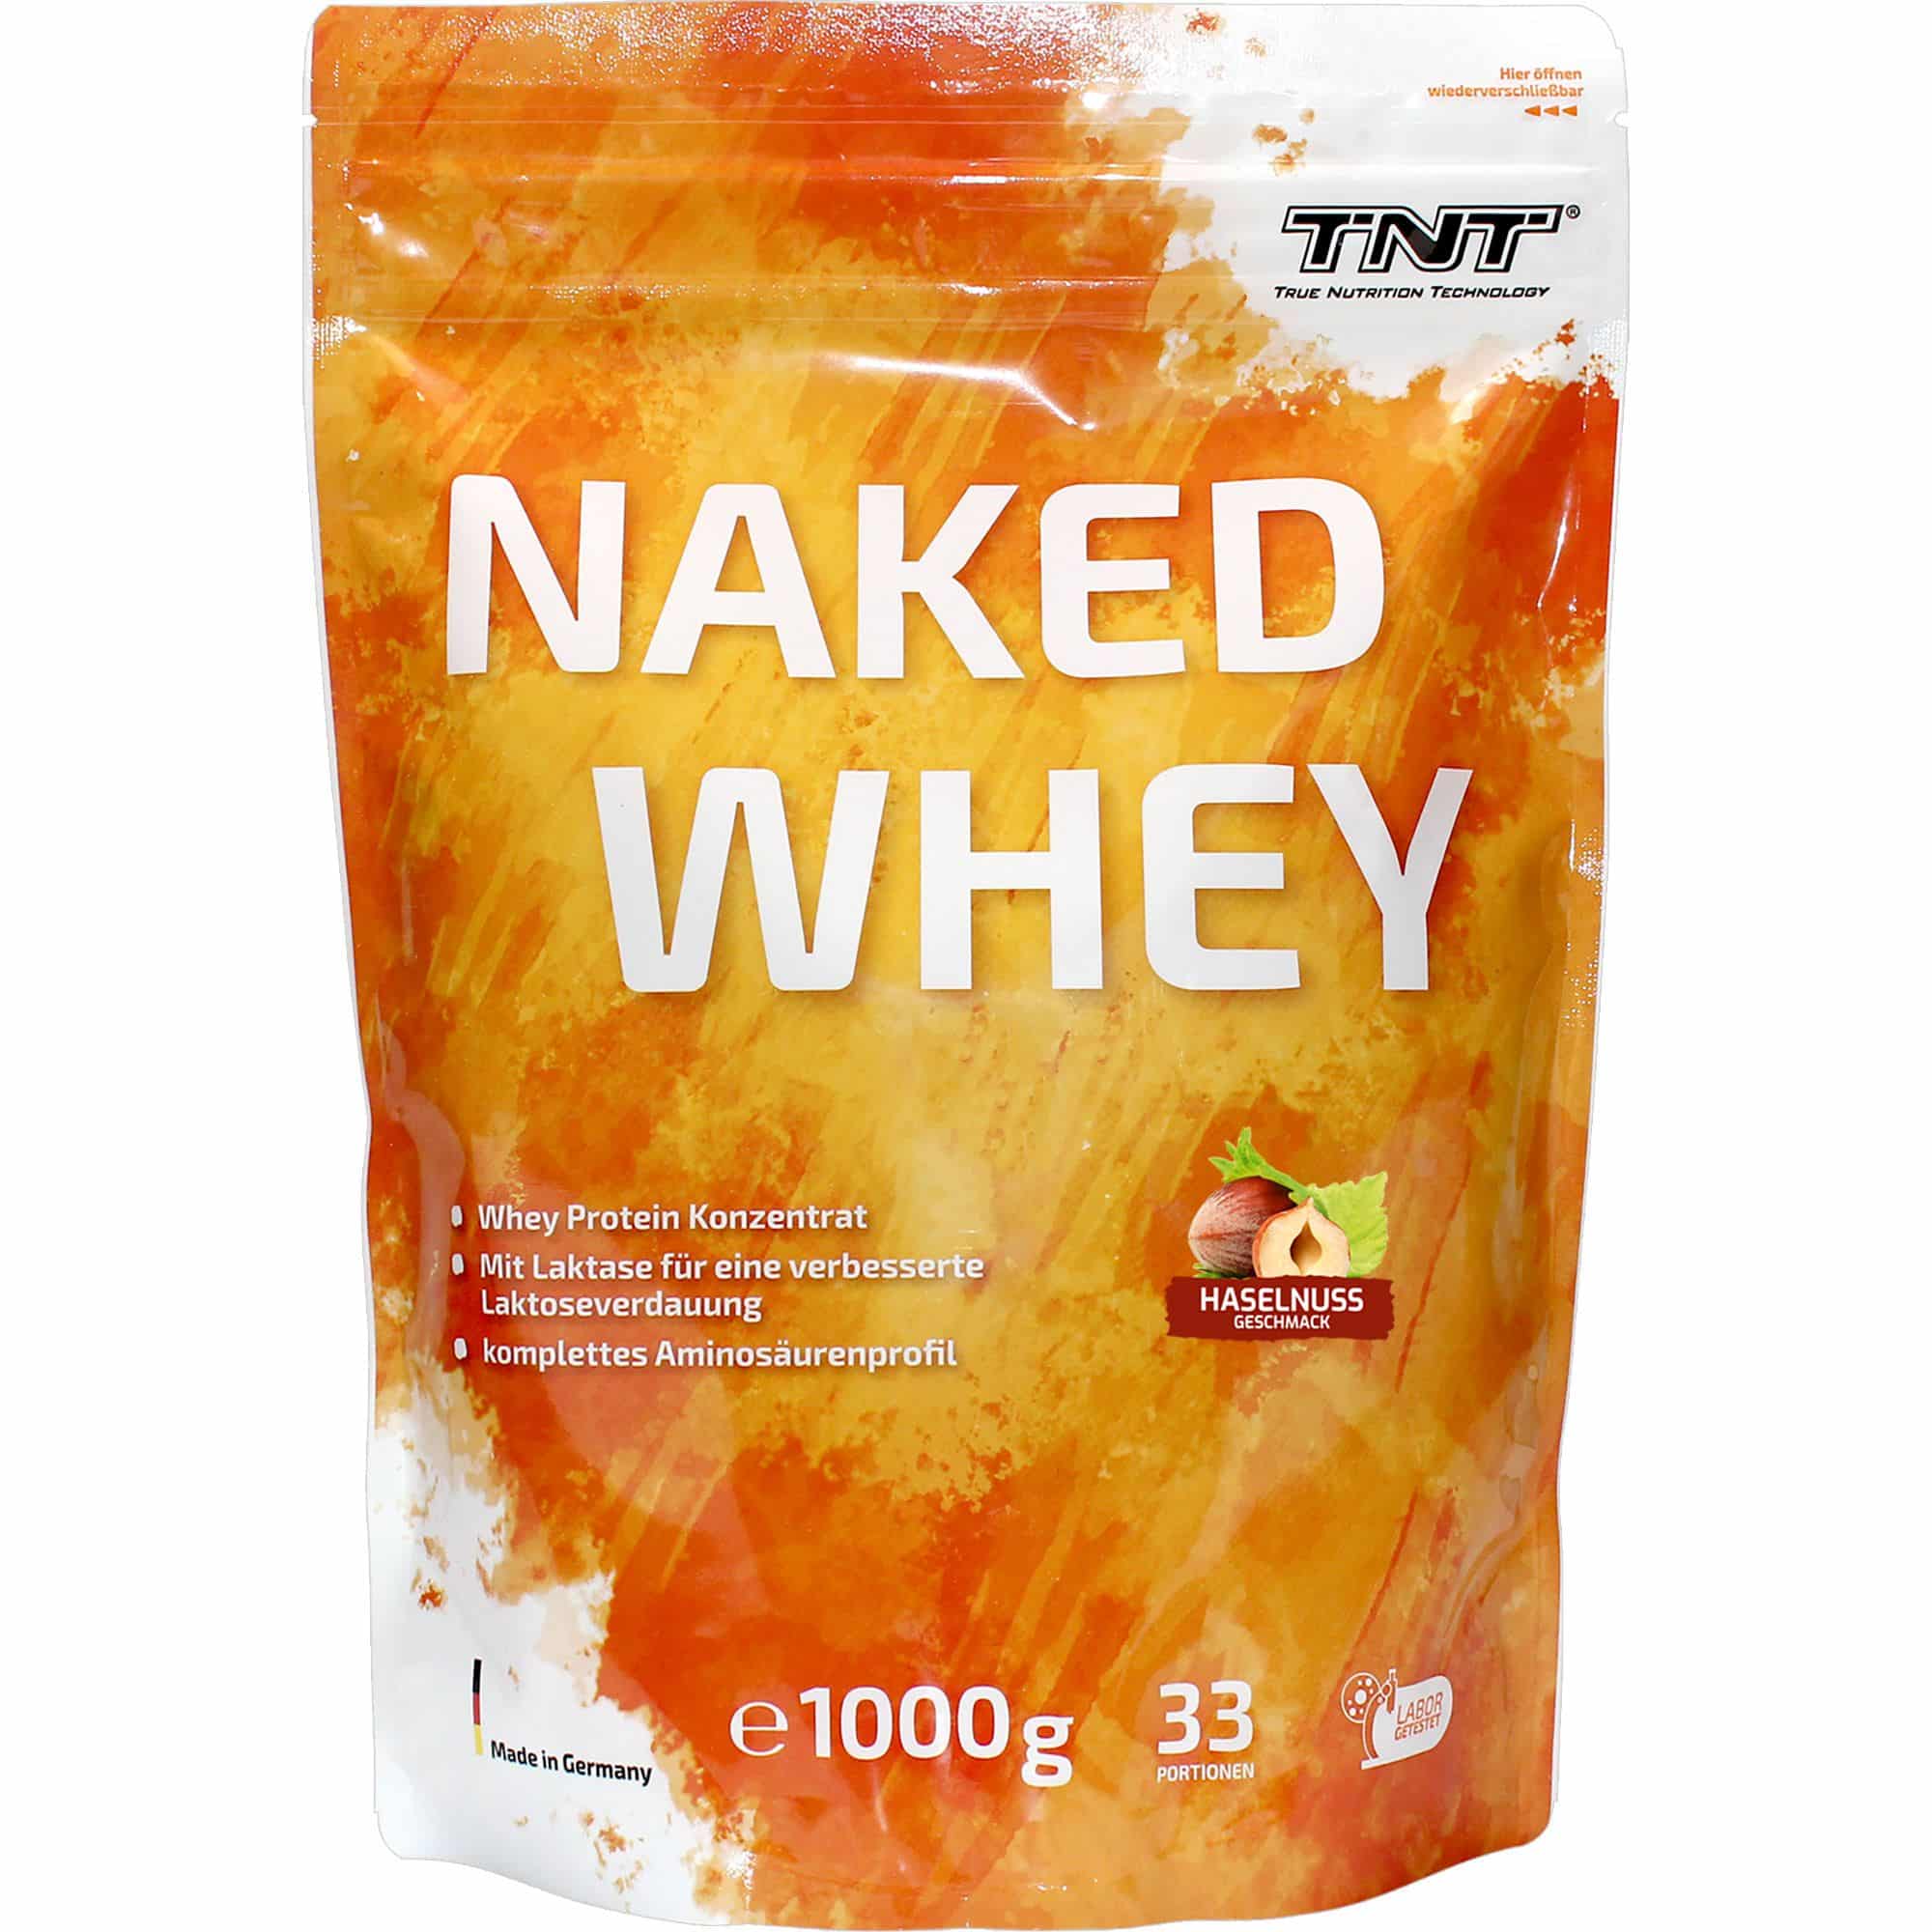 TNT Naked Whey Protein - Haselnuss